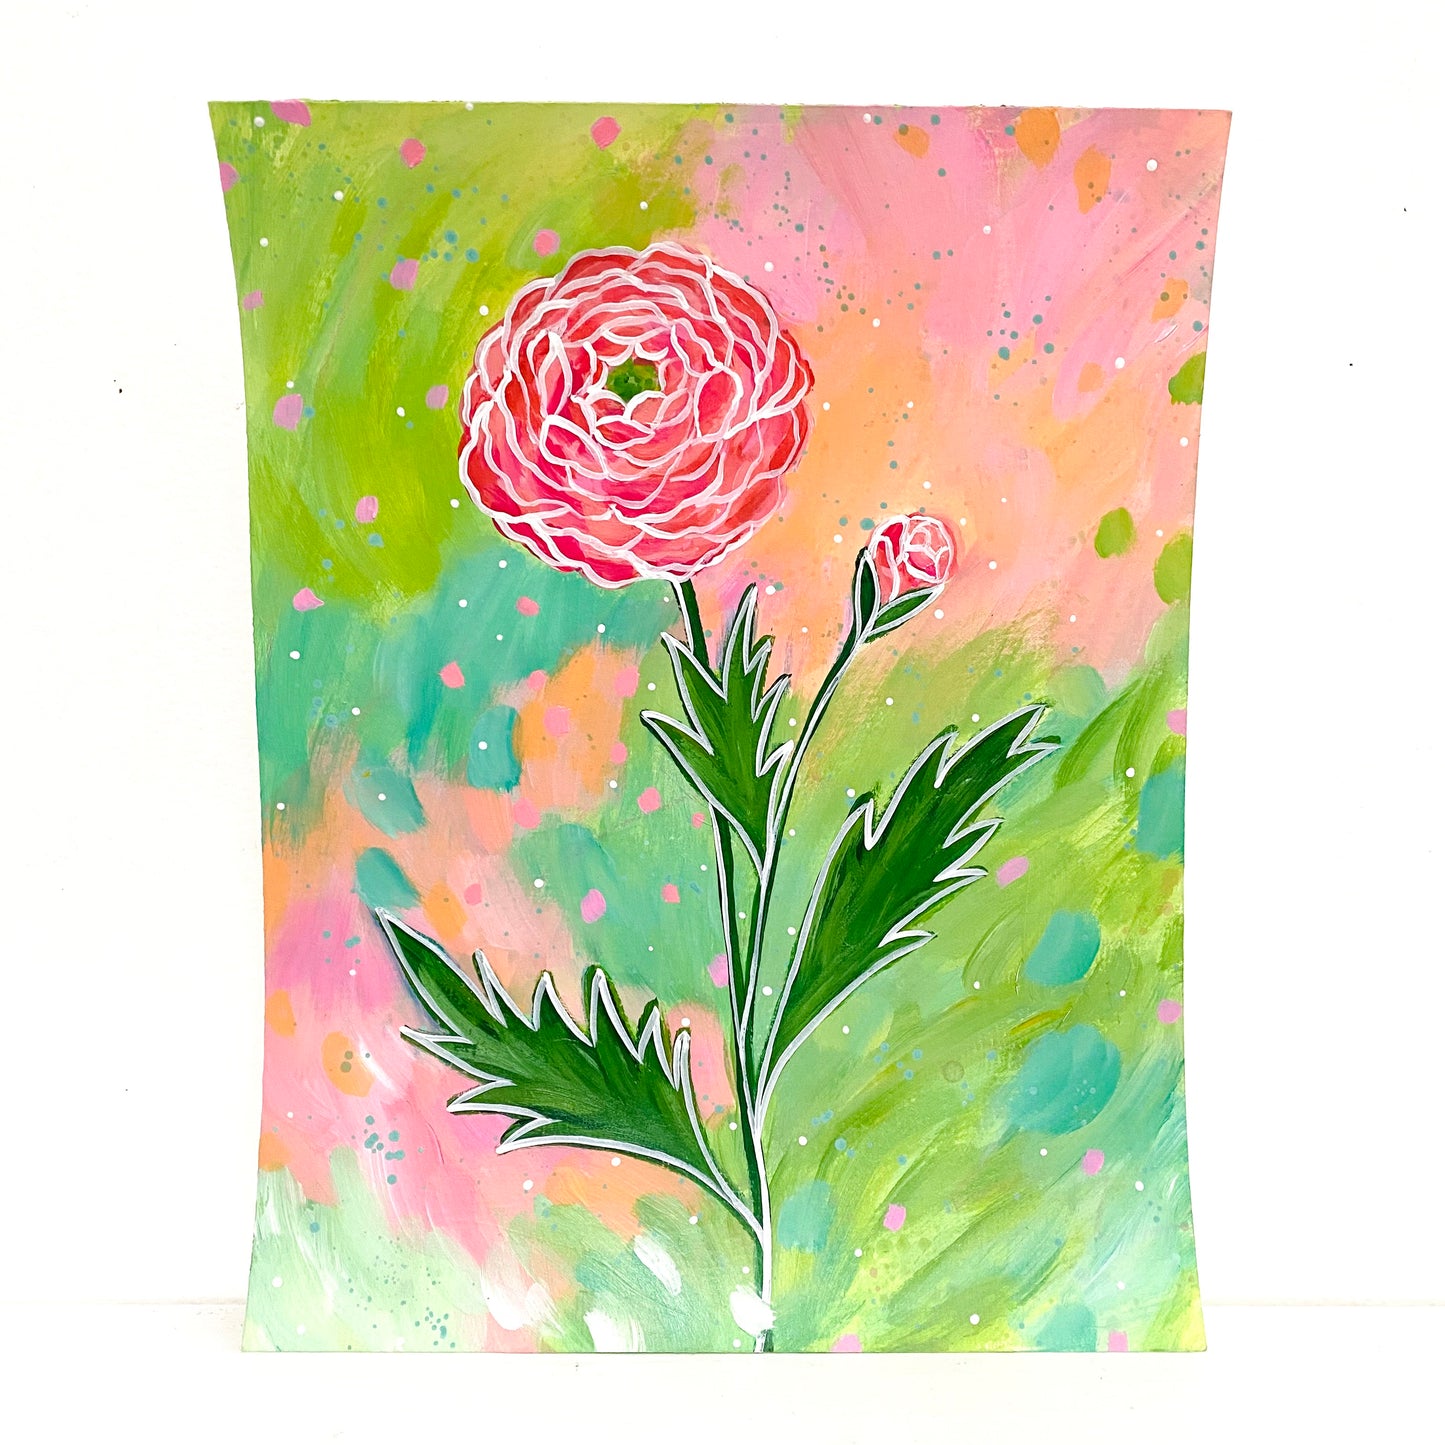 February Flowers Day 8 Ranunculus 8.5x11 inch original painting